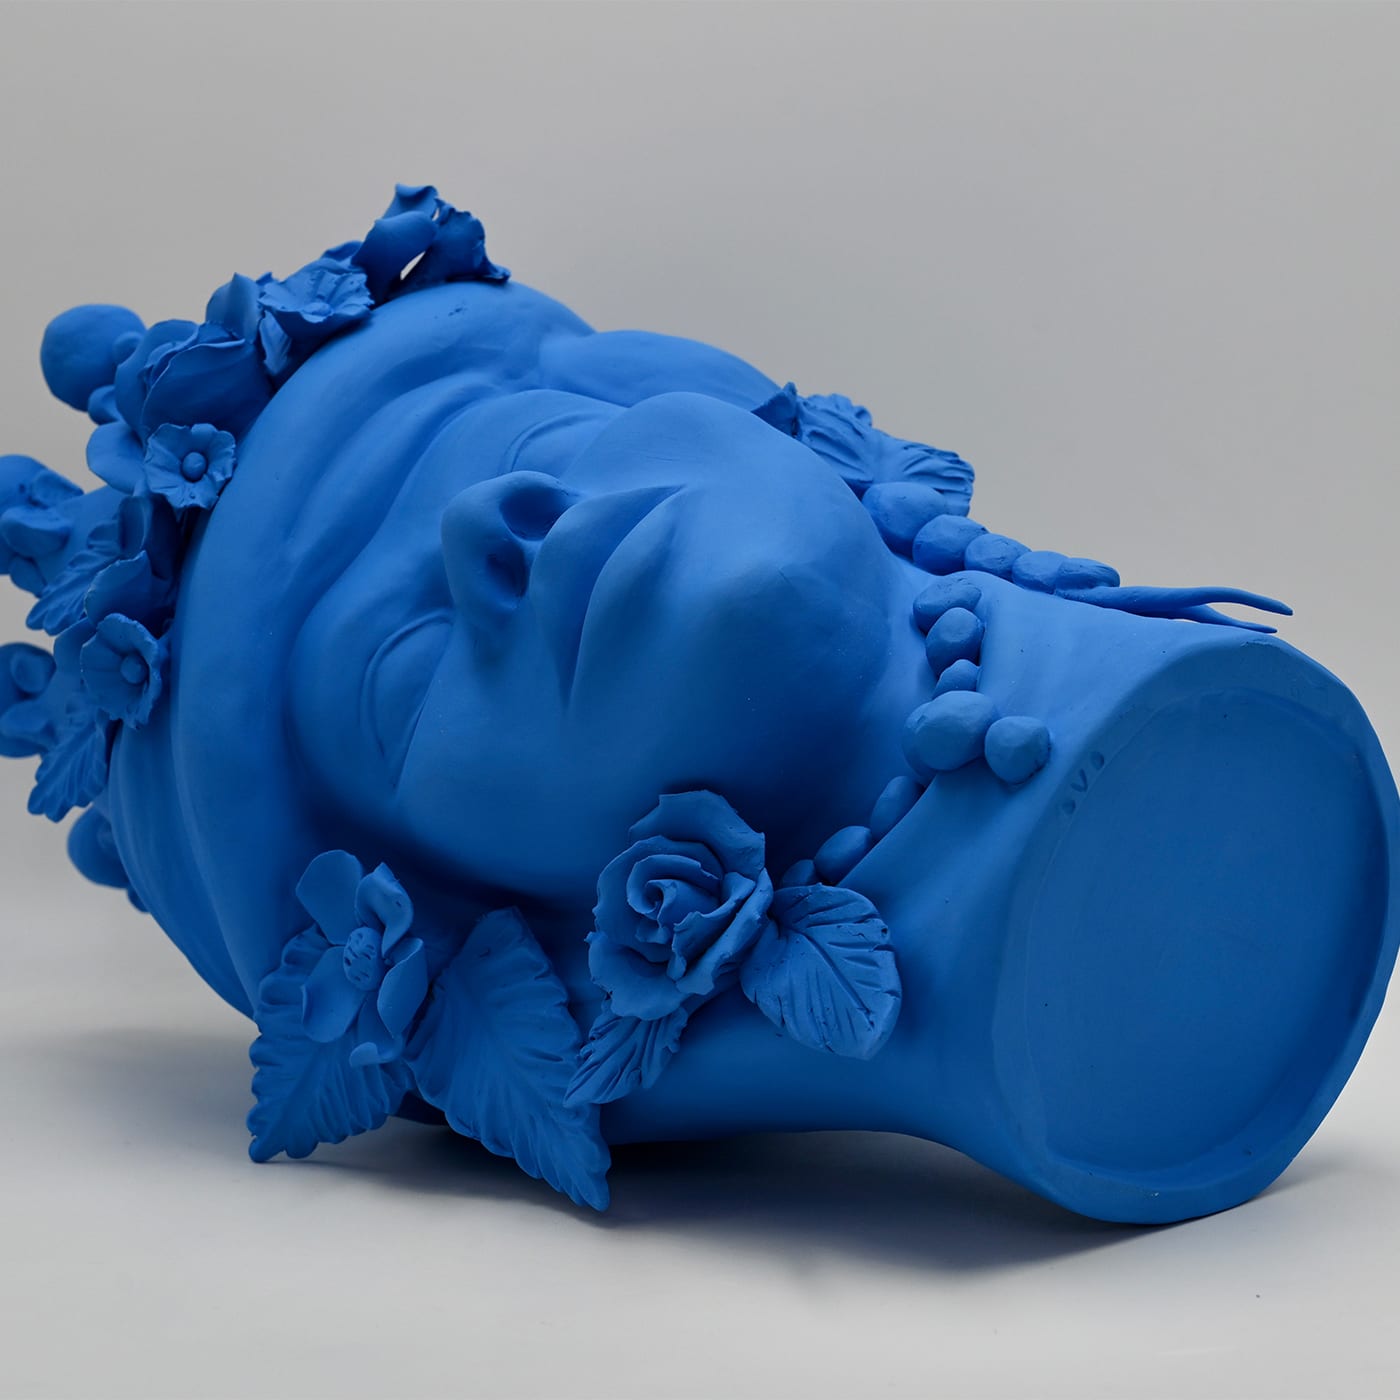 Artisan Blue Moor's Head Sculpture Made in Italy